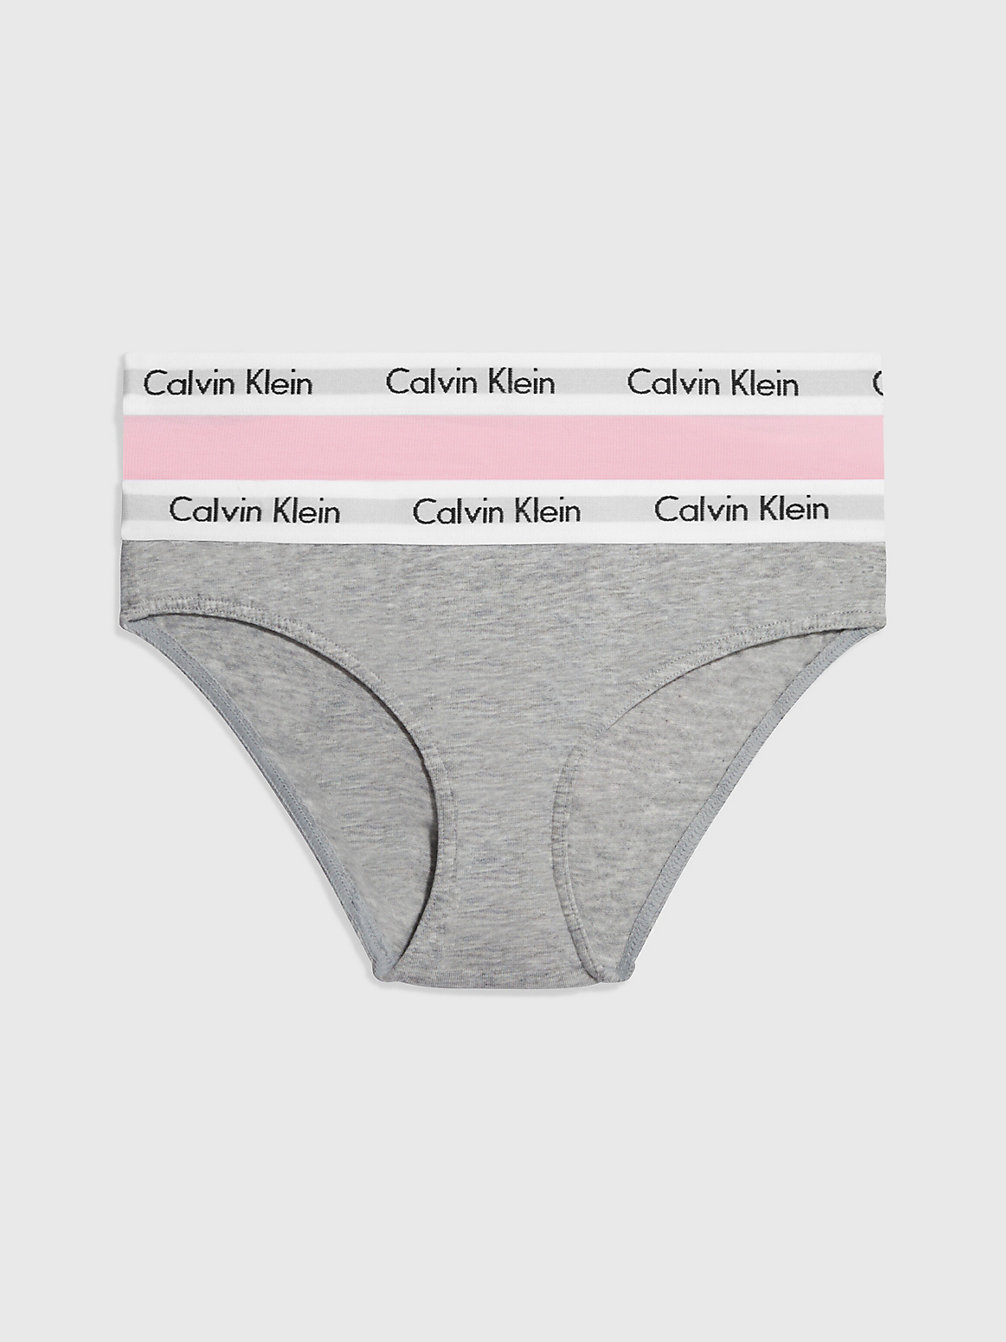 GREY HTR/UNIQUE > Комплект слипов 2 шт. для девочек - Modern Cotton > undefined girls - Calvin Klein